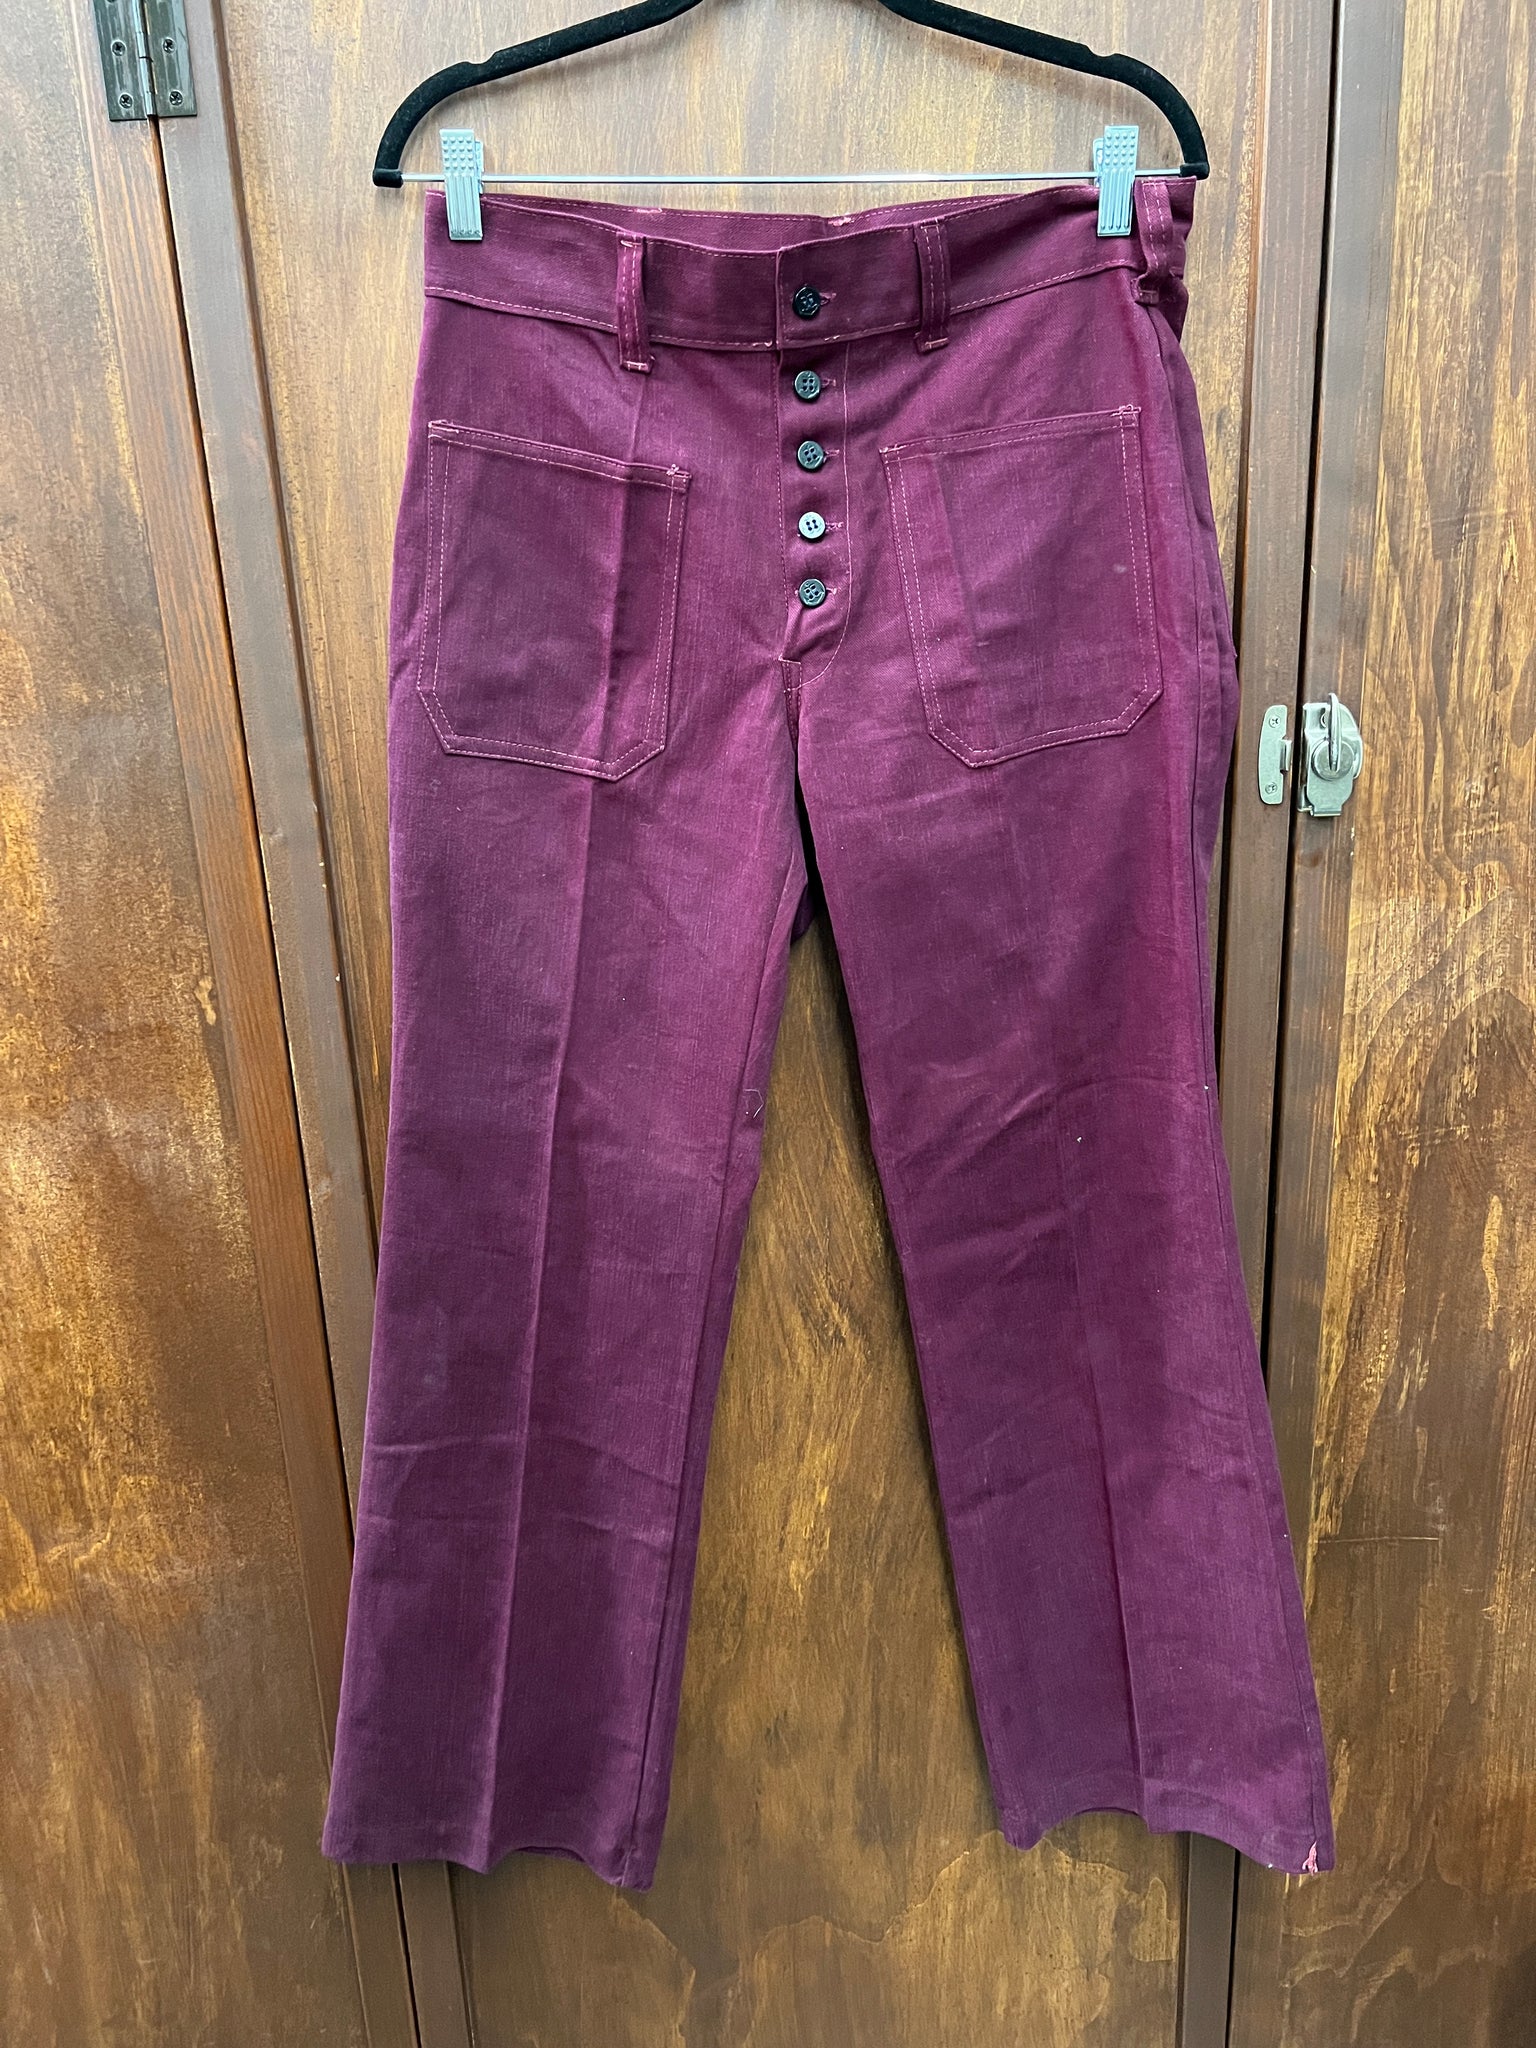 1970s MENS PANTS-Spiegel burgundy deadstock sailor flare jeans